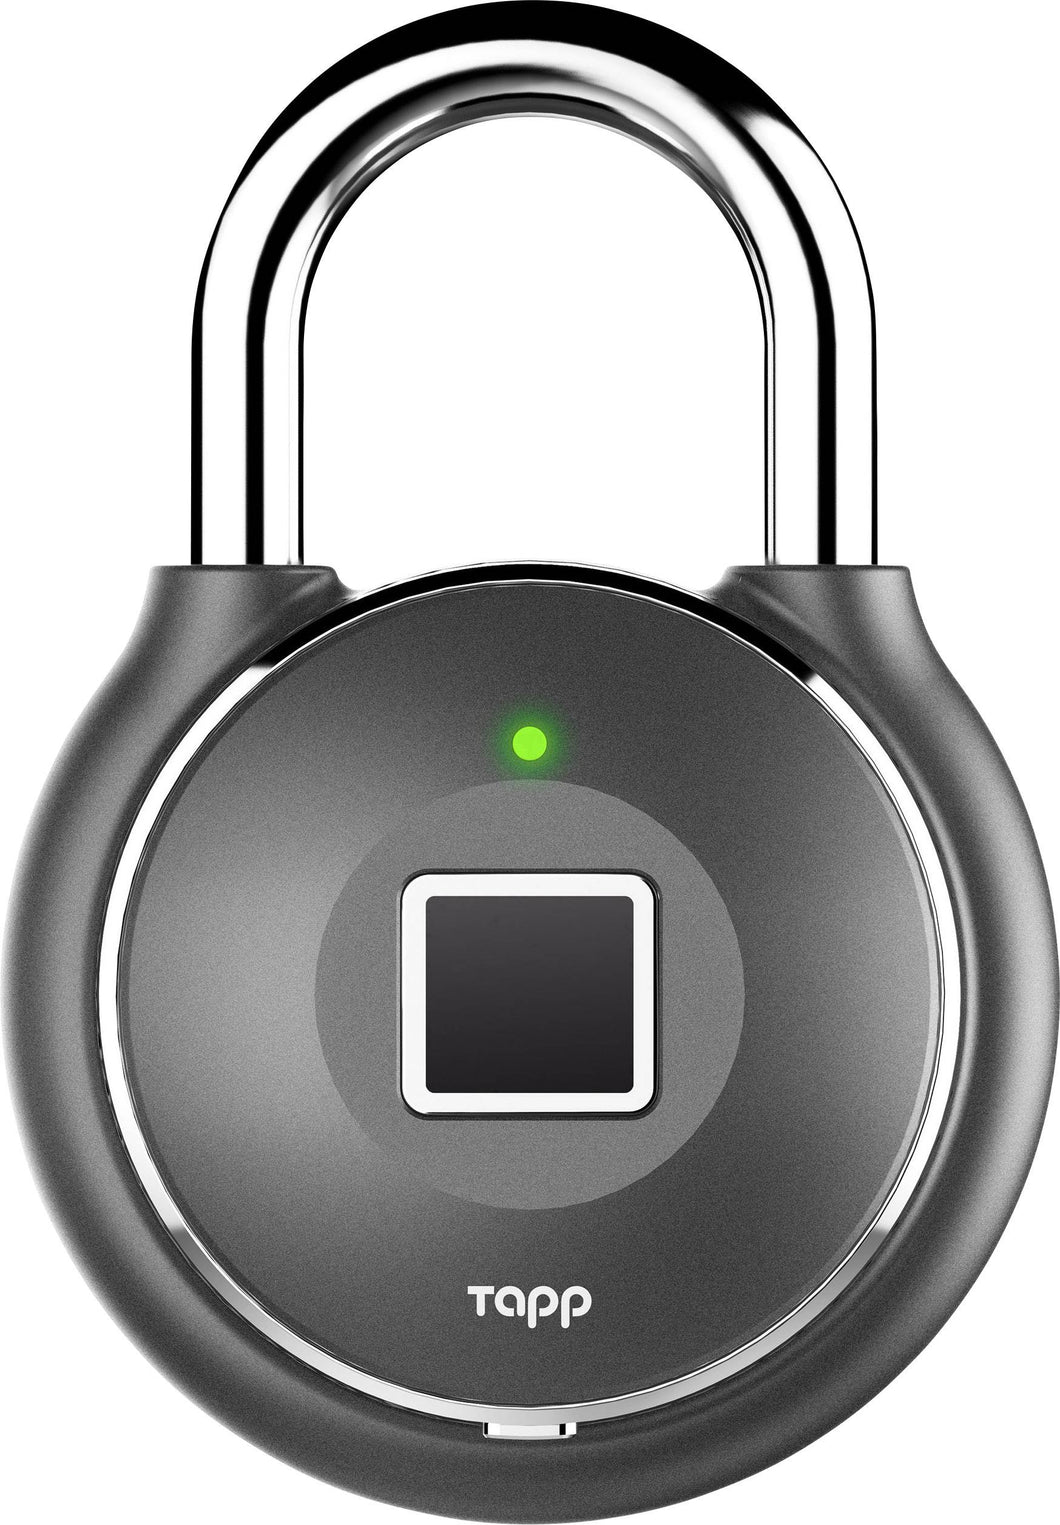 TAPPLOCK One + Smart Fingerprint Bluetooth Padlock